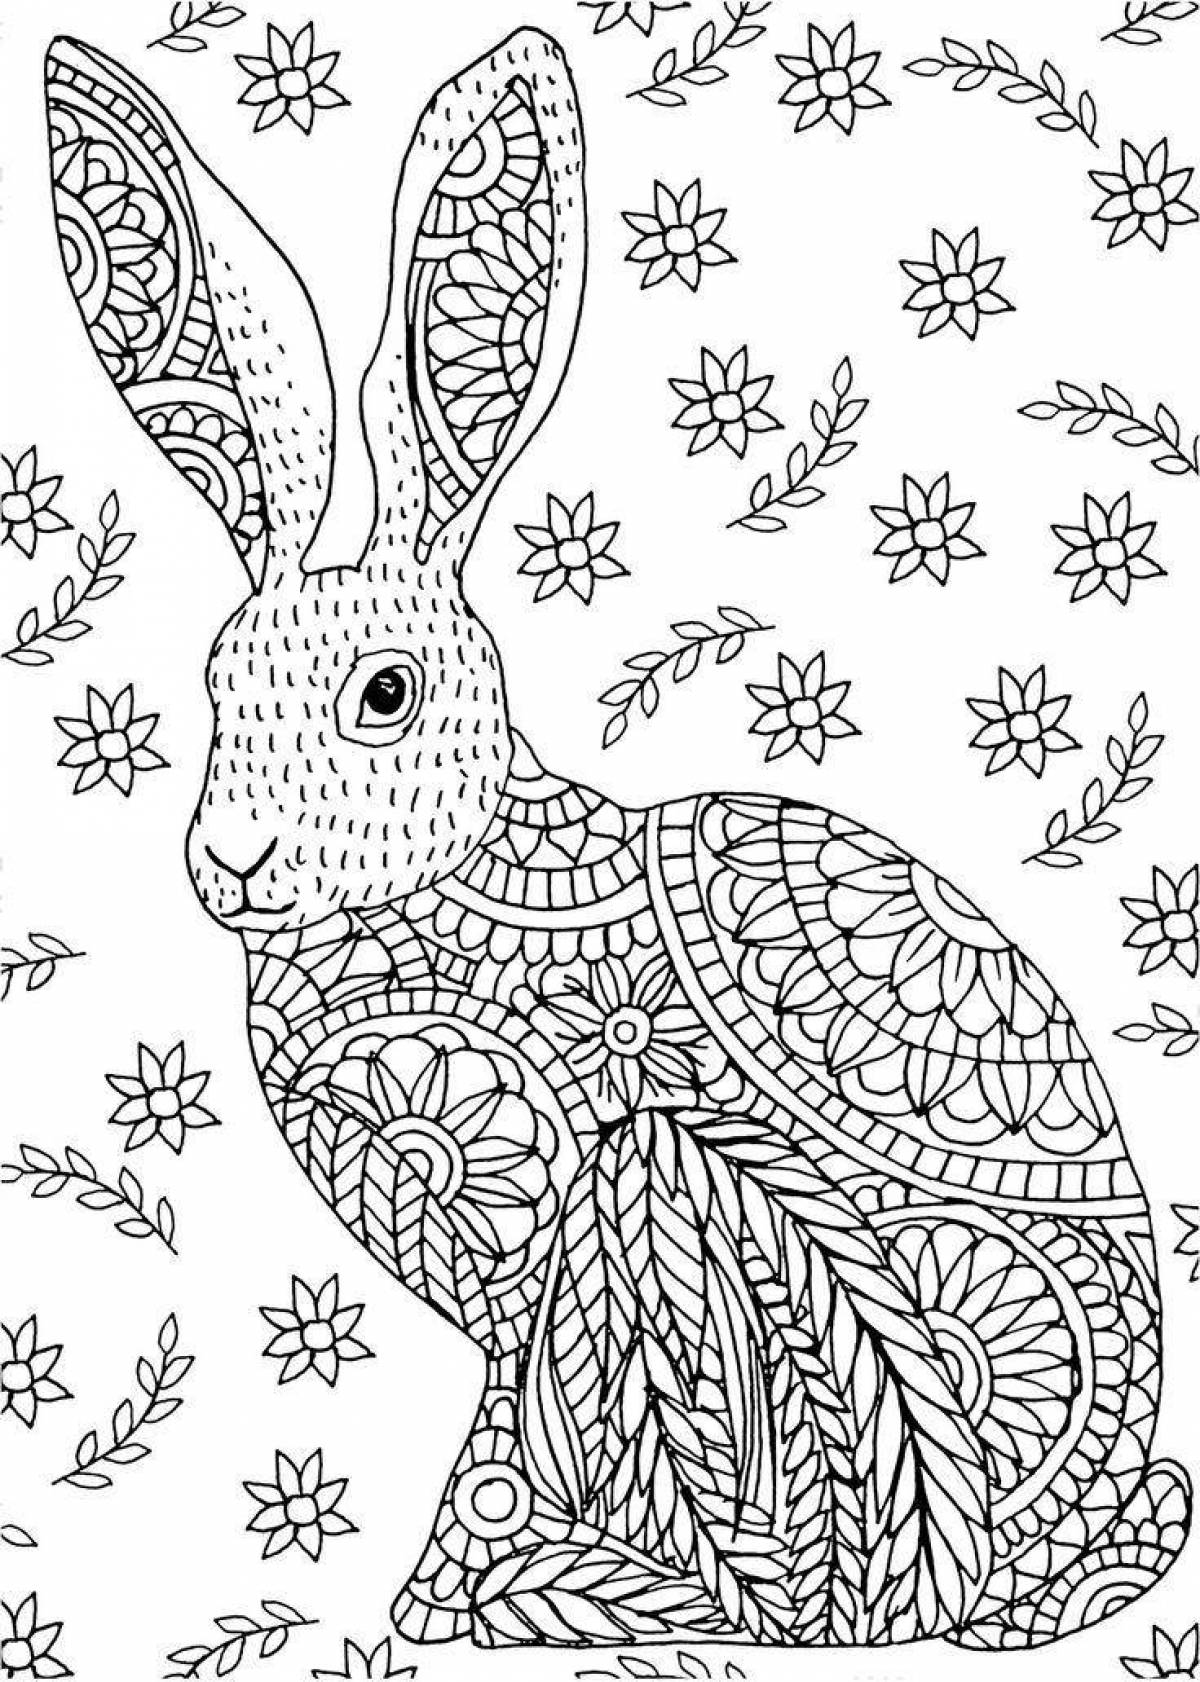 Colorful anti-stress rabbit coloring book